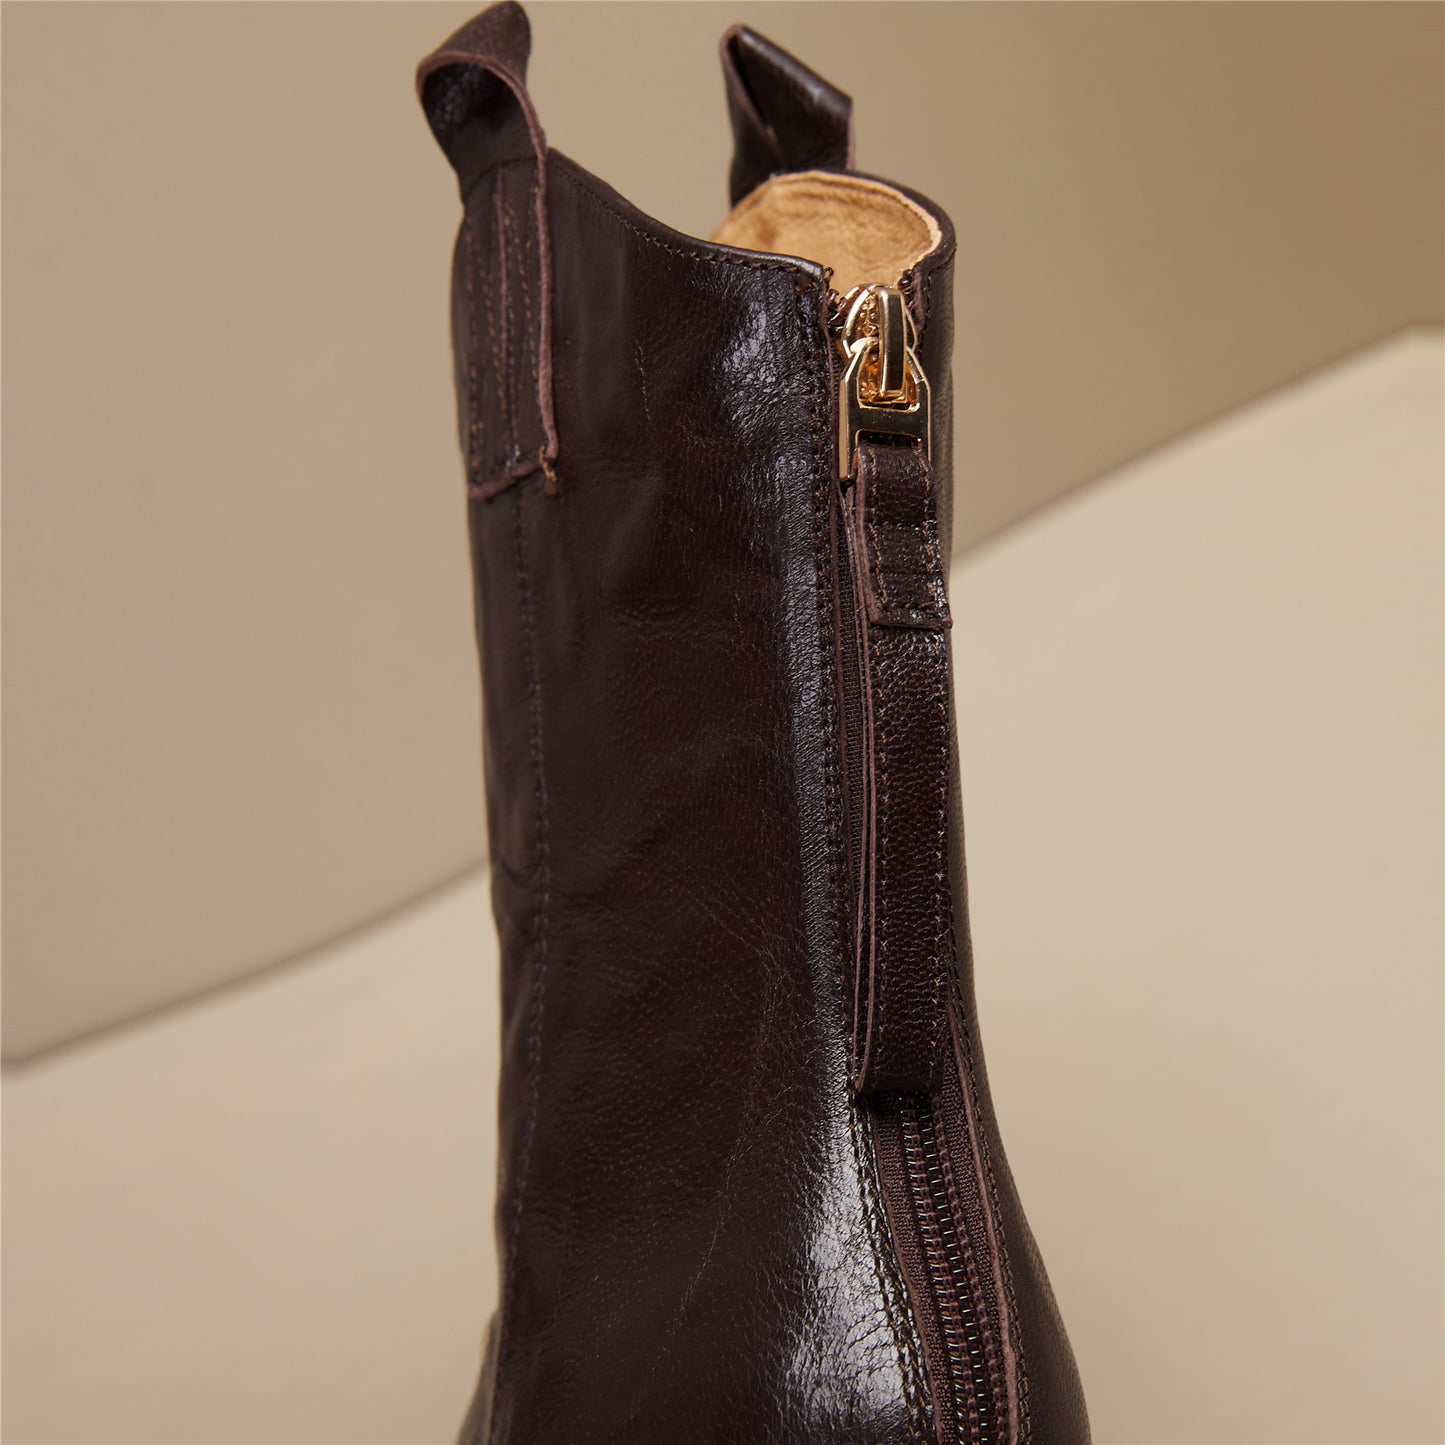 TinaCus Women's Genuine Leather Sexy High Heel Handmade Platform Back Zip Mid Calf Boots